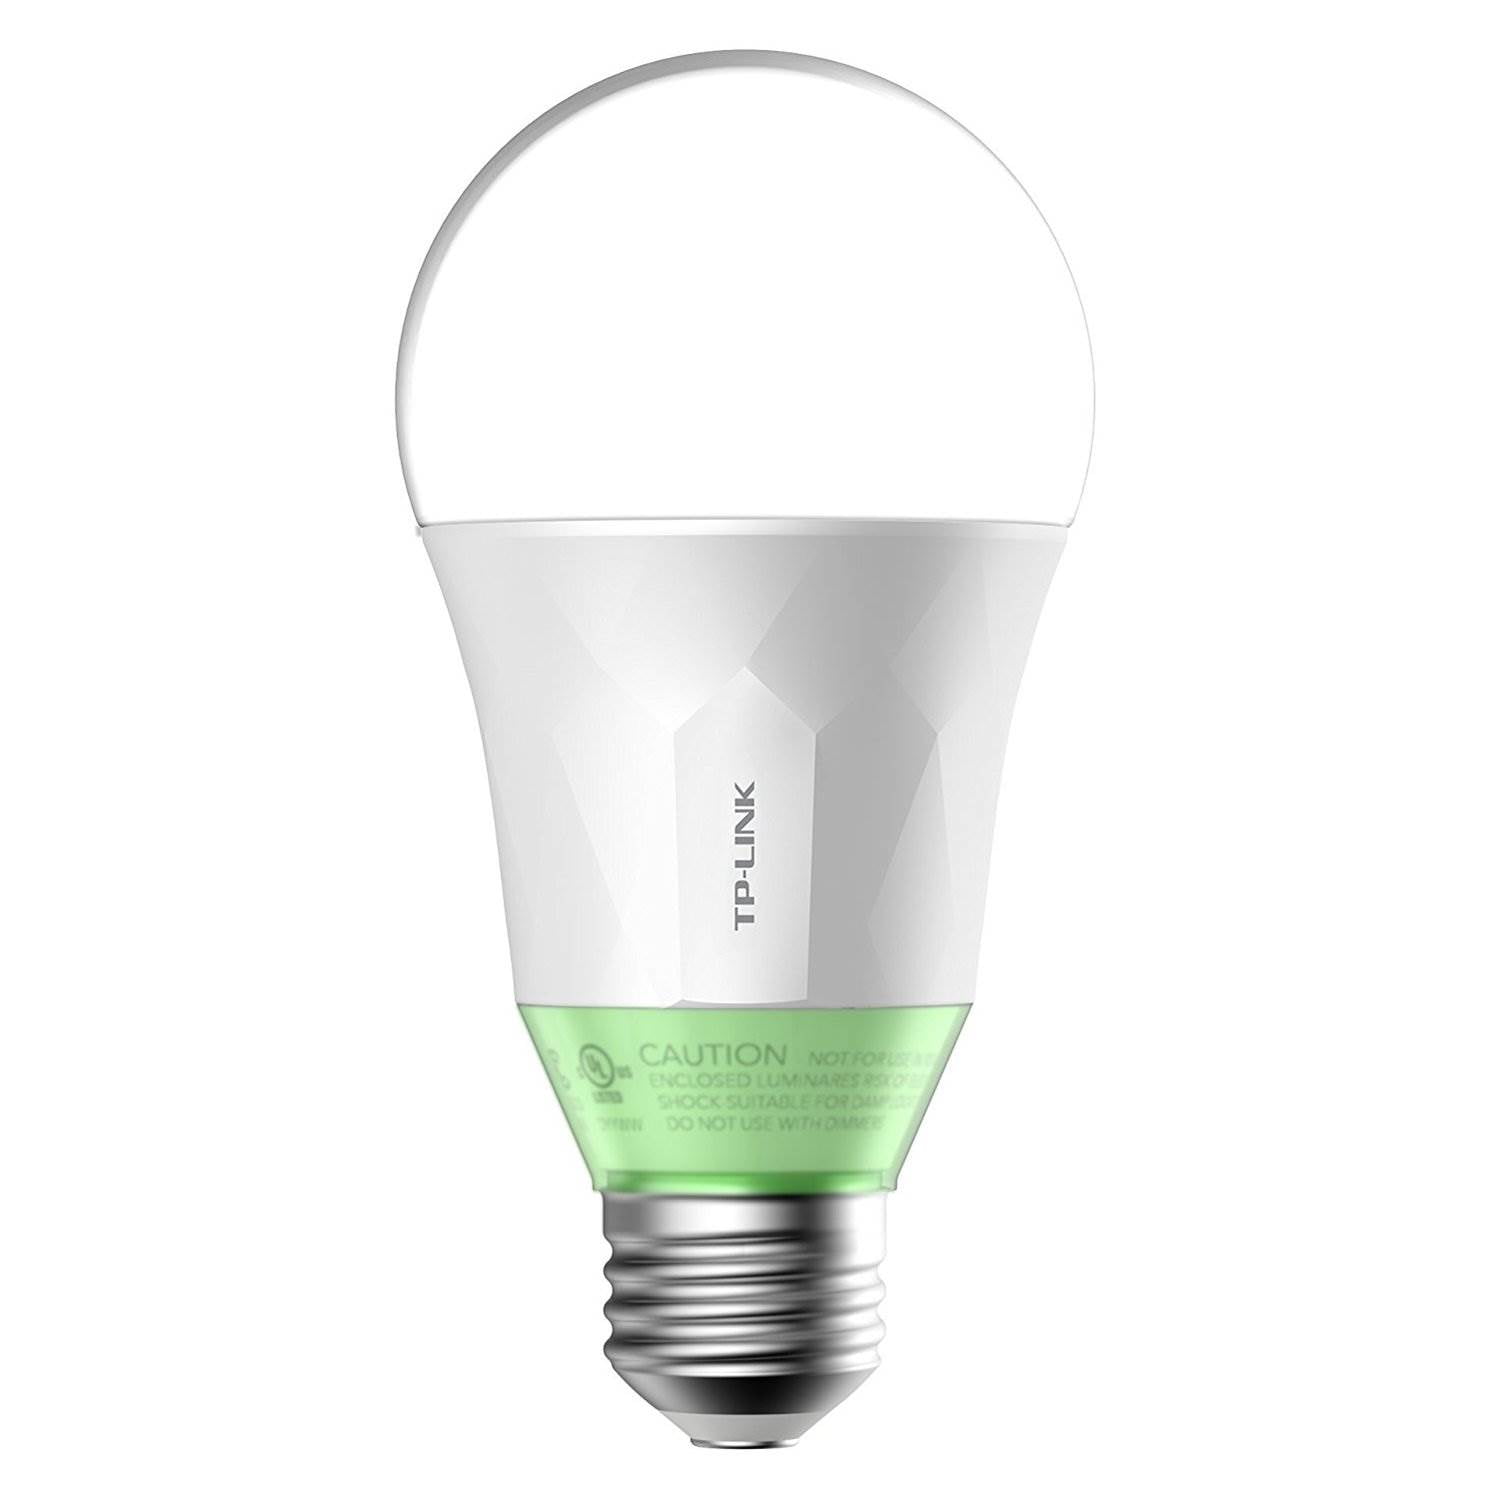 TP-Link 60W Energy Saving Smart Wi-Fi Light Bulb Dimmable | LB110 - Walmart.com